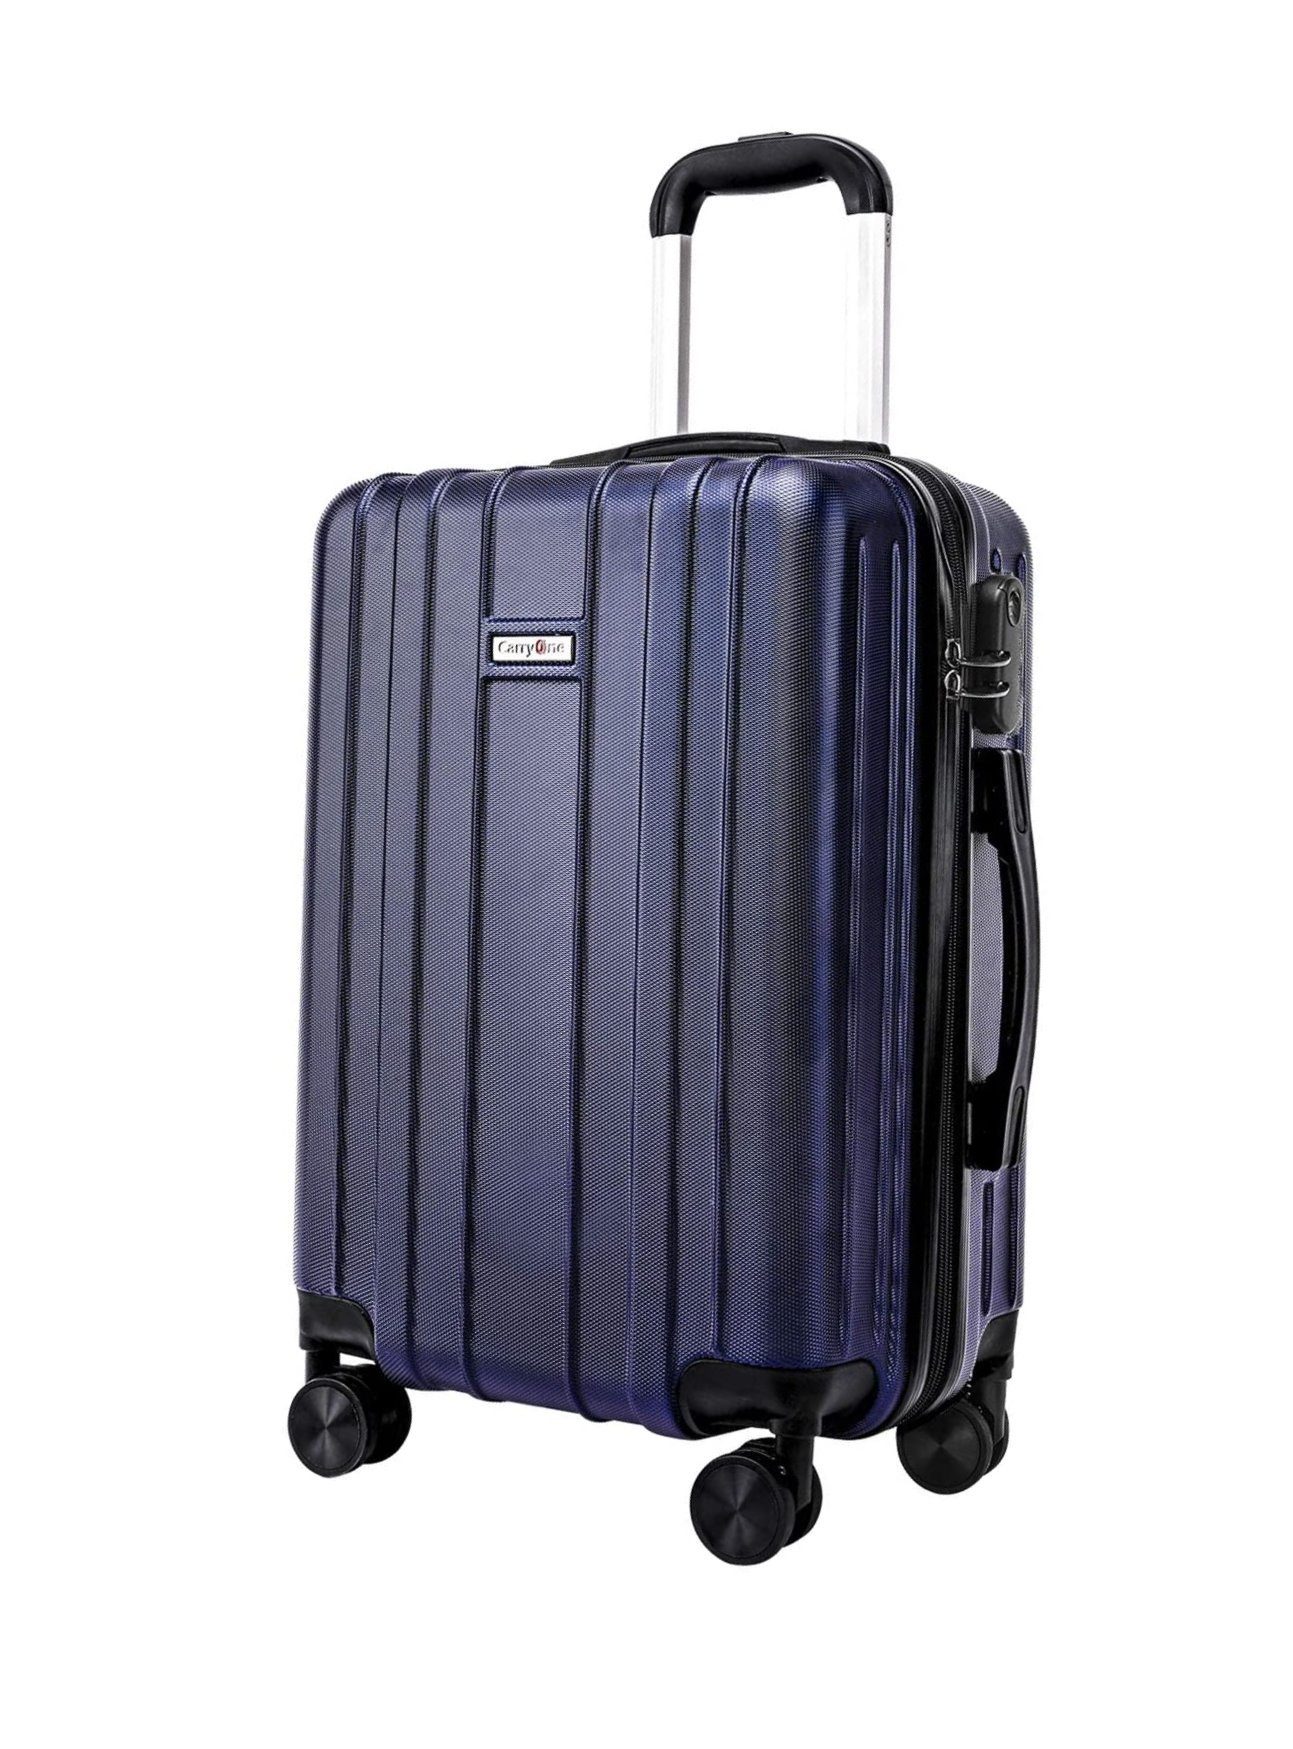 dynamic24 Handgepäck-Trolley, 4 Rollen, Carryone Handgepäck blau Koffer  Reisekoffer Trolley Hartschale Boardcase